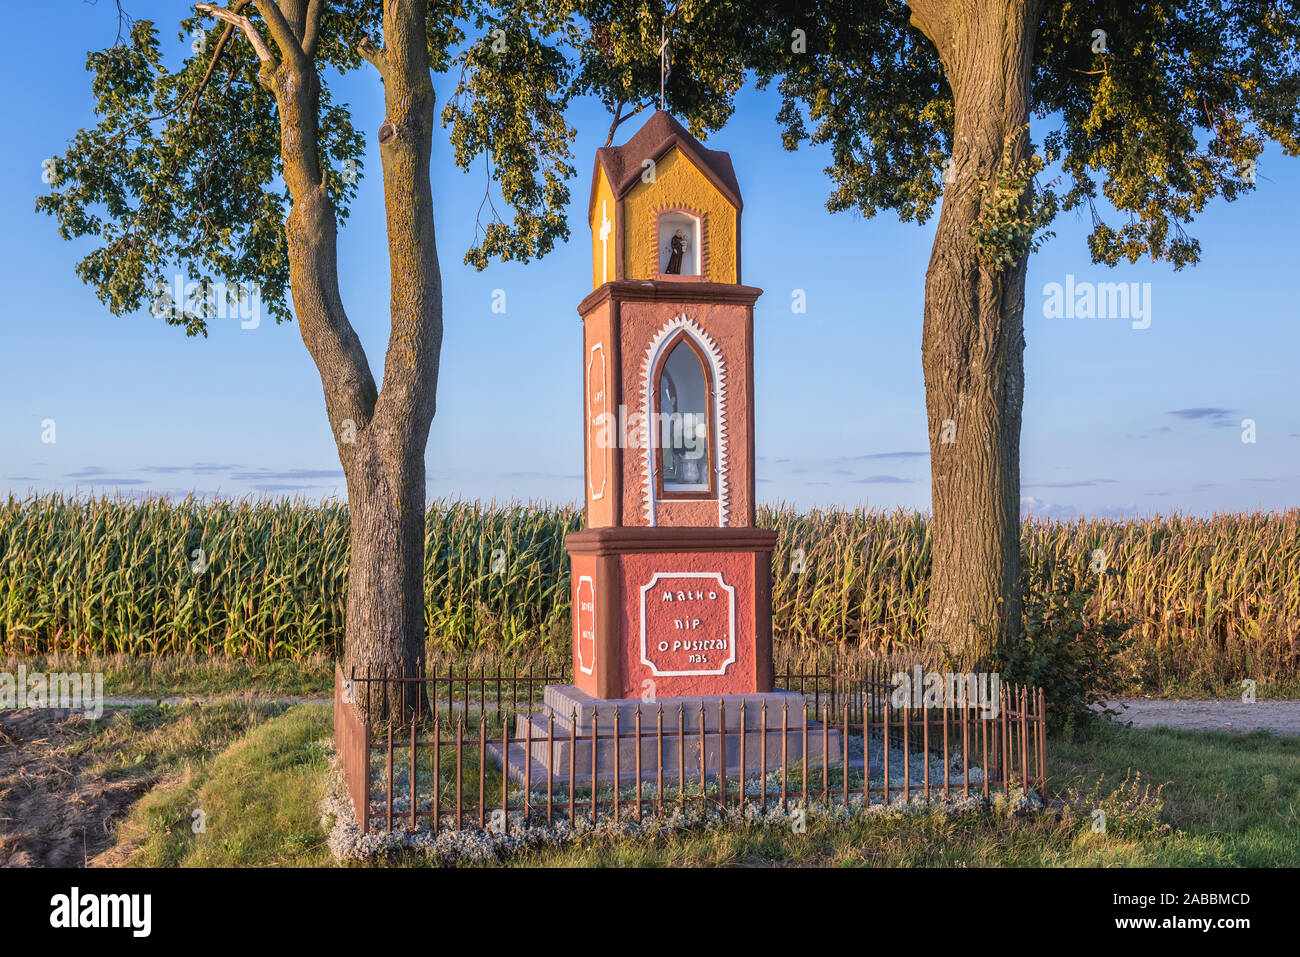 Wayside shrine in rural area of masuria region of Poland Stock Photo